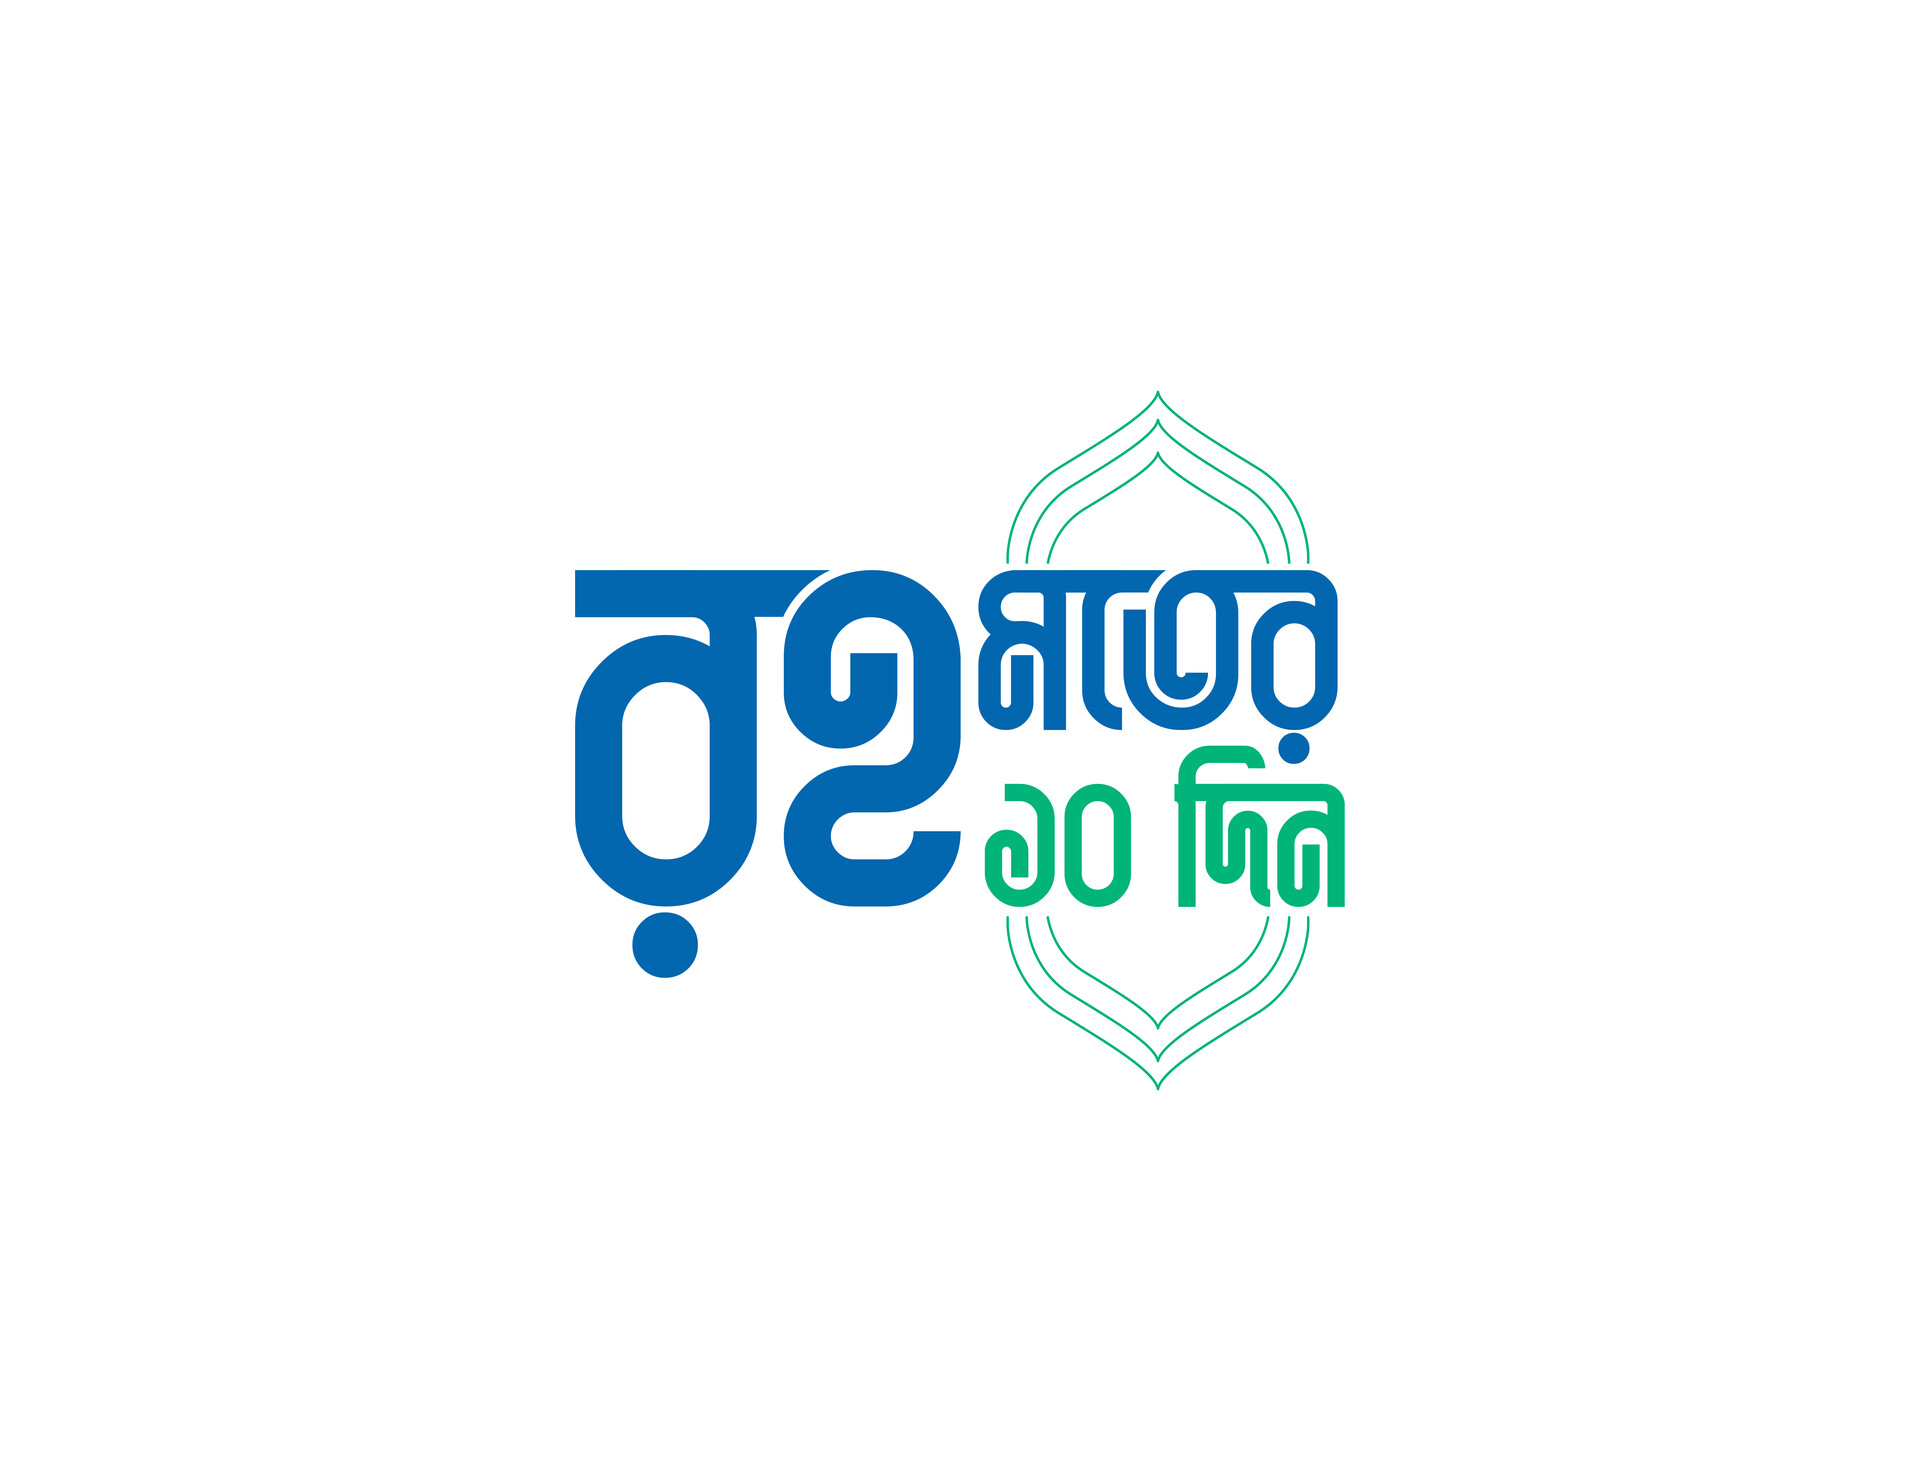 Tamim khan - Mnemonic - Campaign Logo - Typography Design